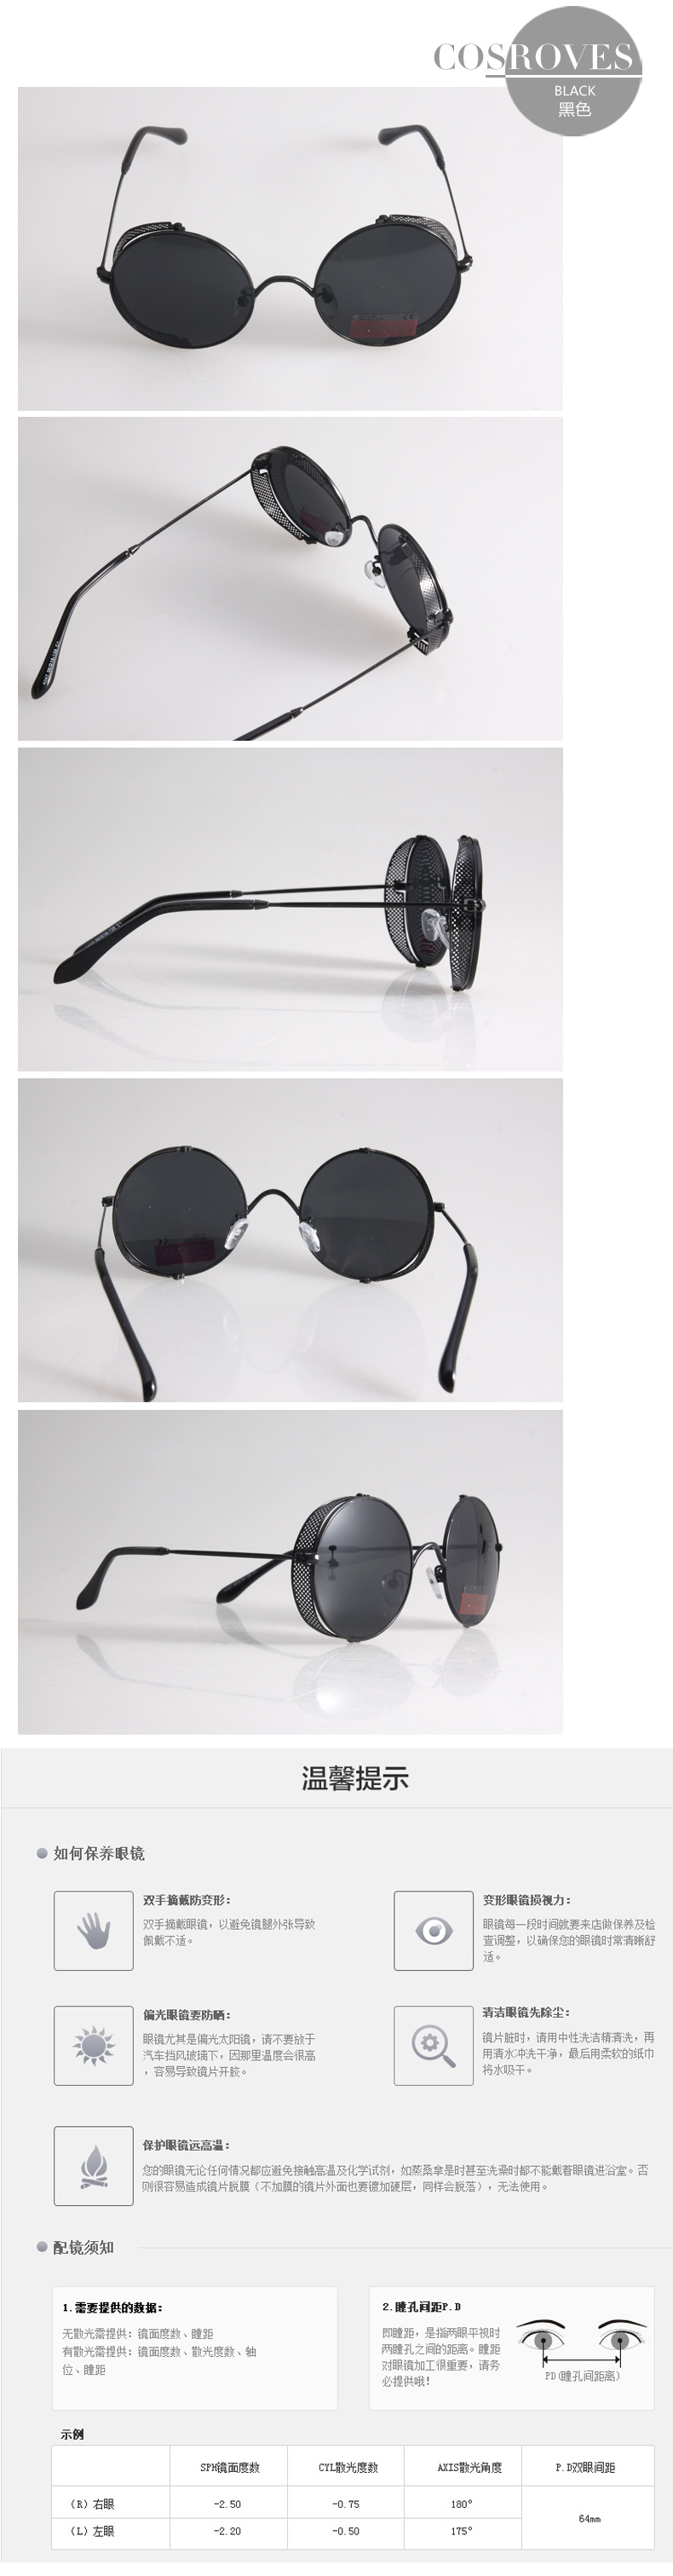 COSROVES 新款圆形金属太阳镜反光彩膜太阳眼镜墨镜SG66